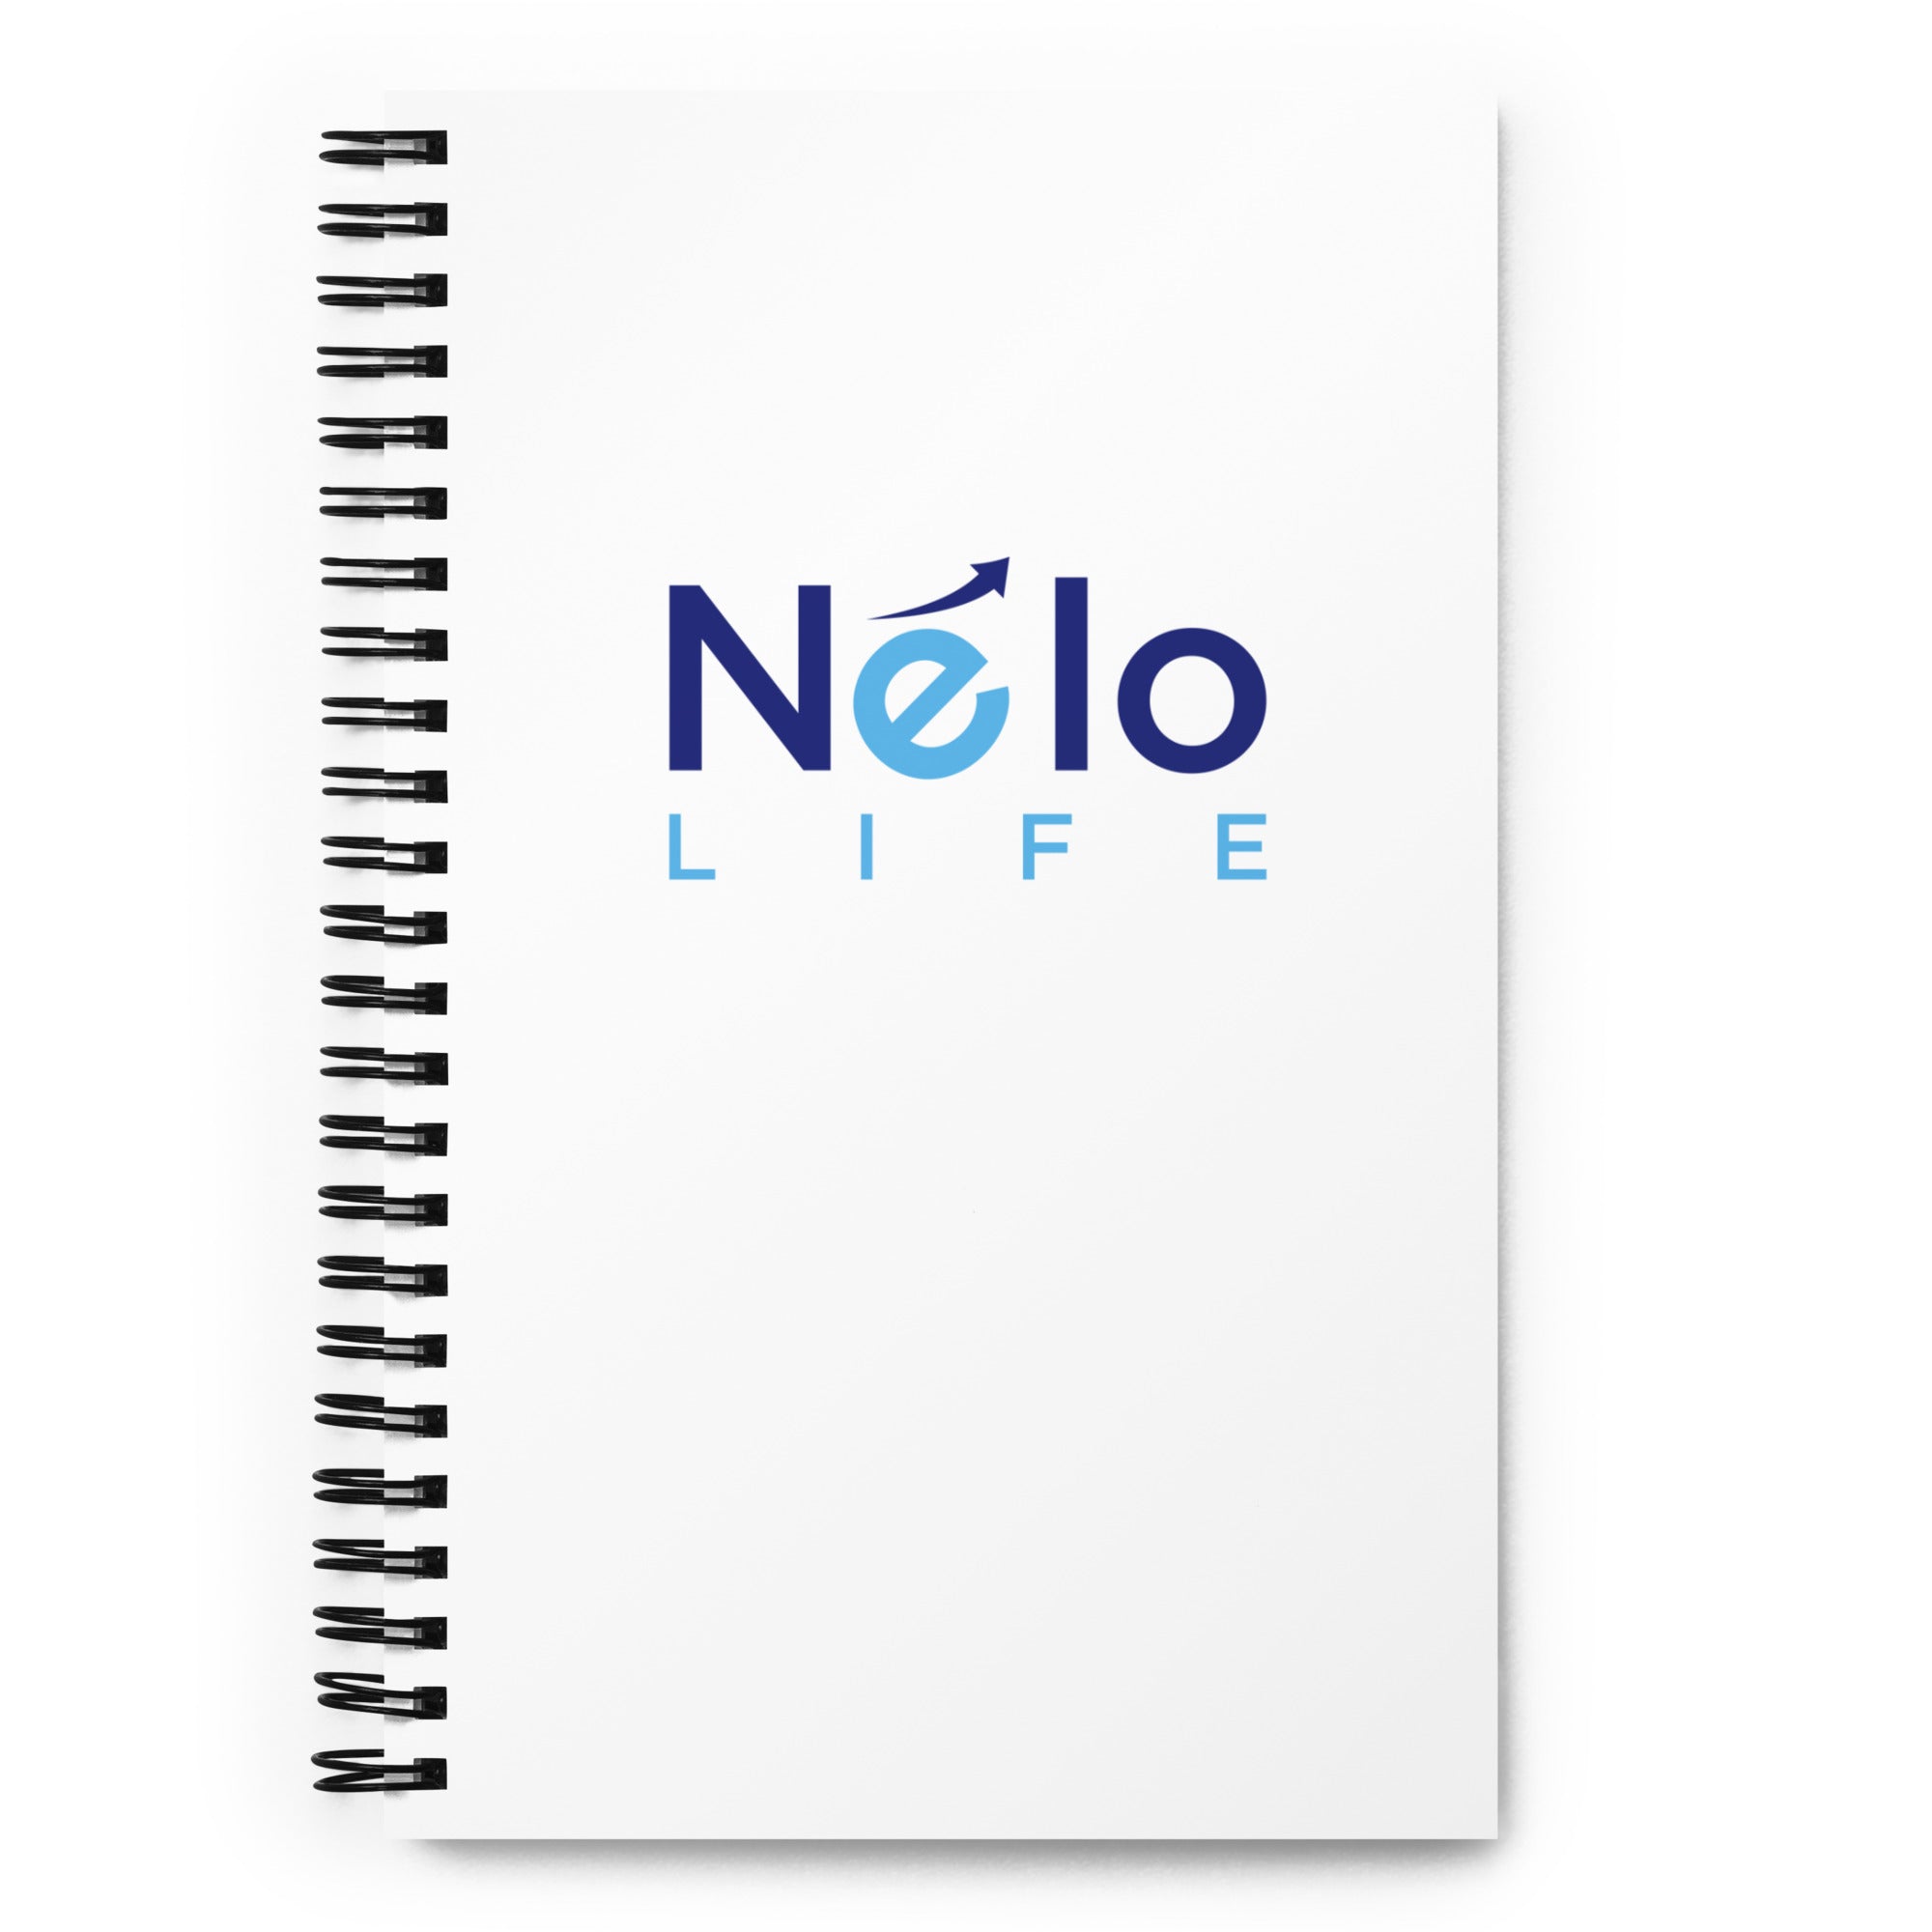 NELO LIFE Spiral notebook